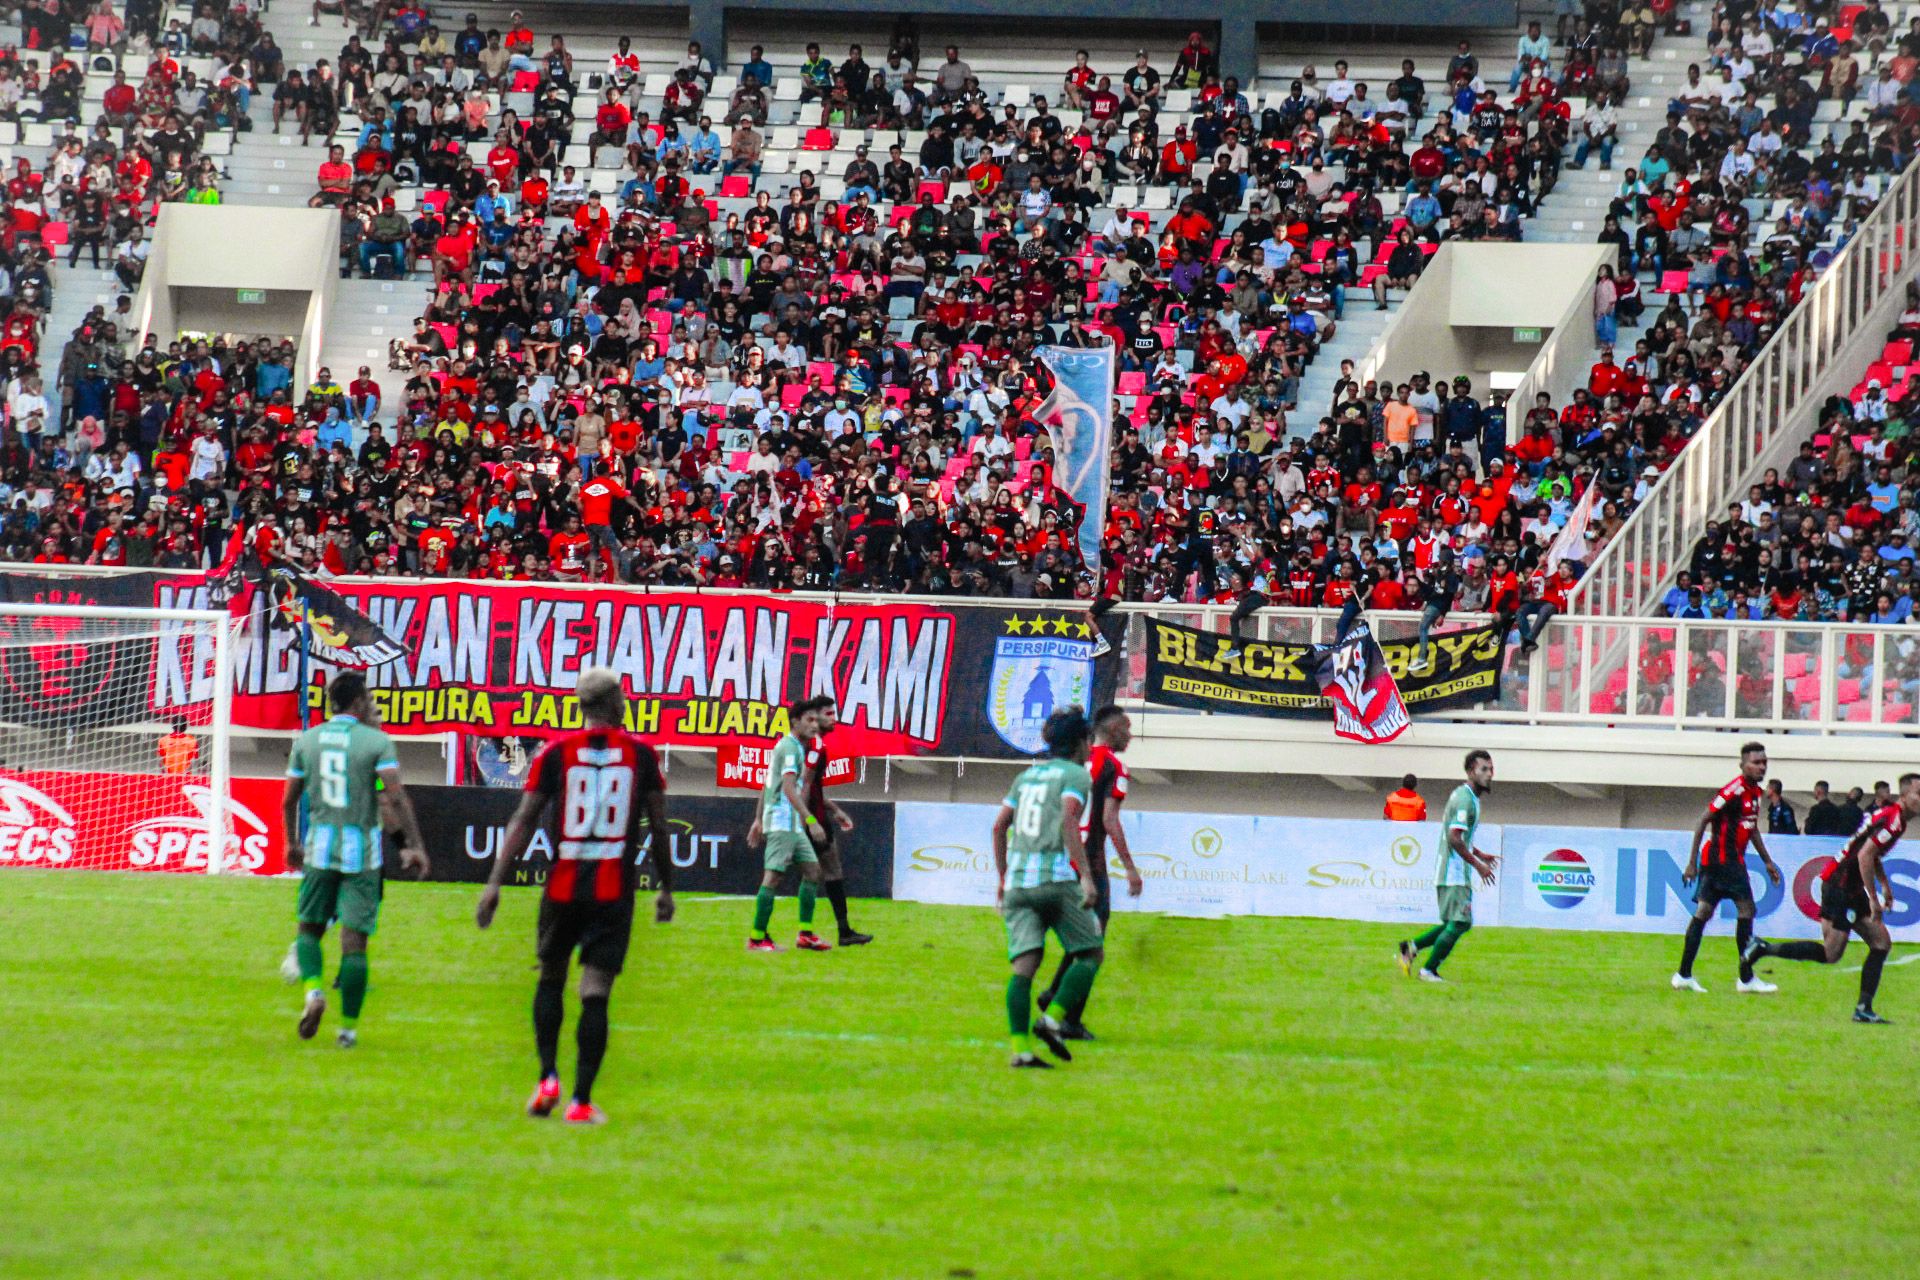 Laga Persipura vs Deltras di Stadion Lukas Enembe, Sentani, Kabupaten Jayapura dipadati para penonton maupun suporter Persipura Jayapura dok (PORTAL PAPUA)